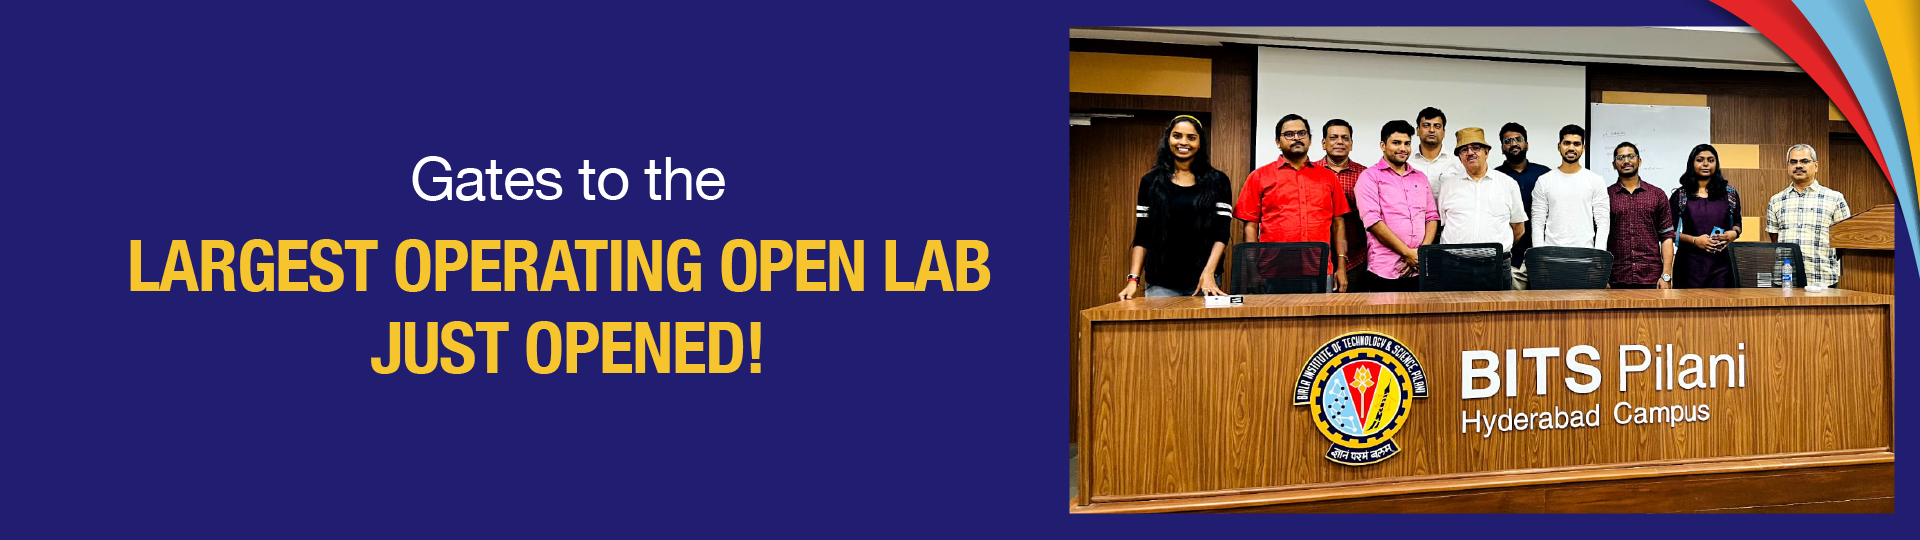 A window to infinite possibilities: Open Lab week